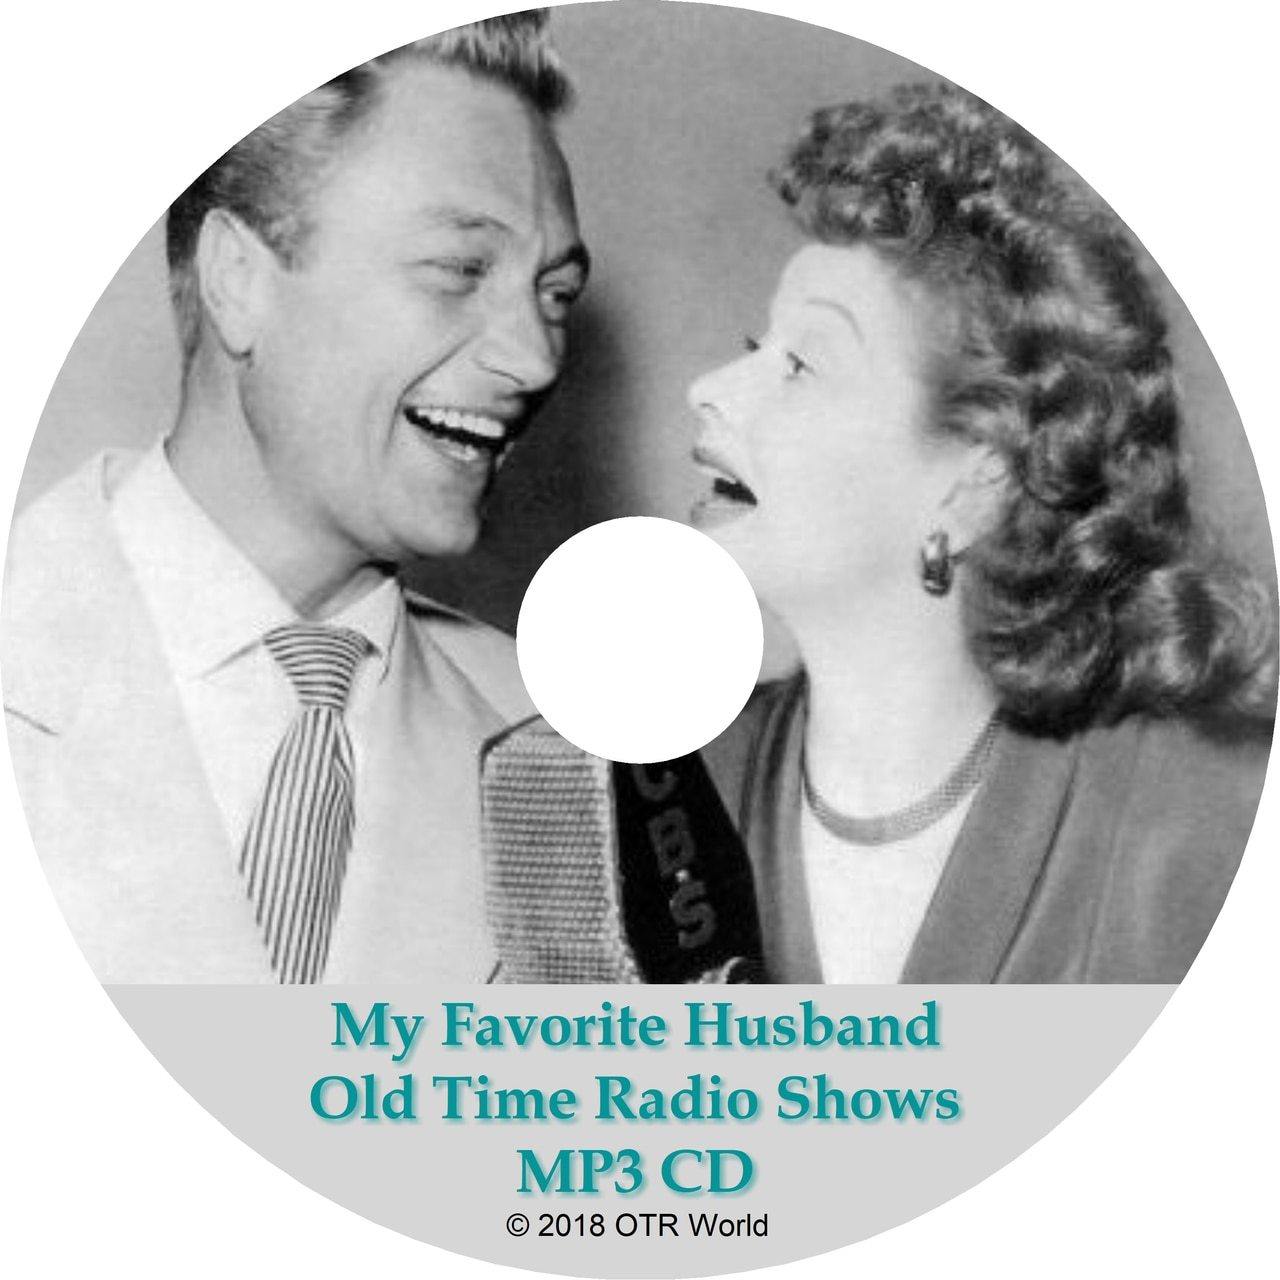 My Favorite Husband OTR Old Time Radio Show MP3 CD 118 Episodes - OTR World